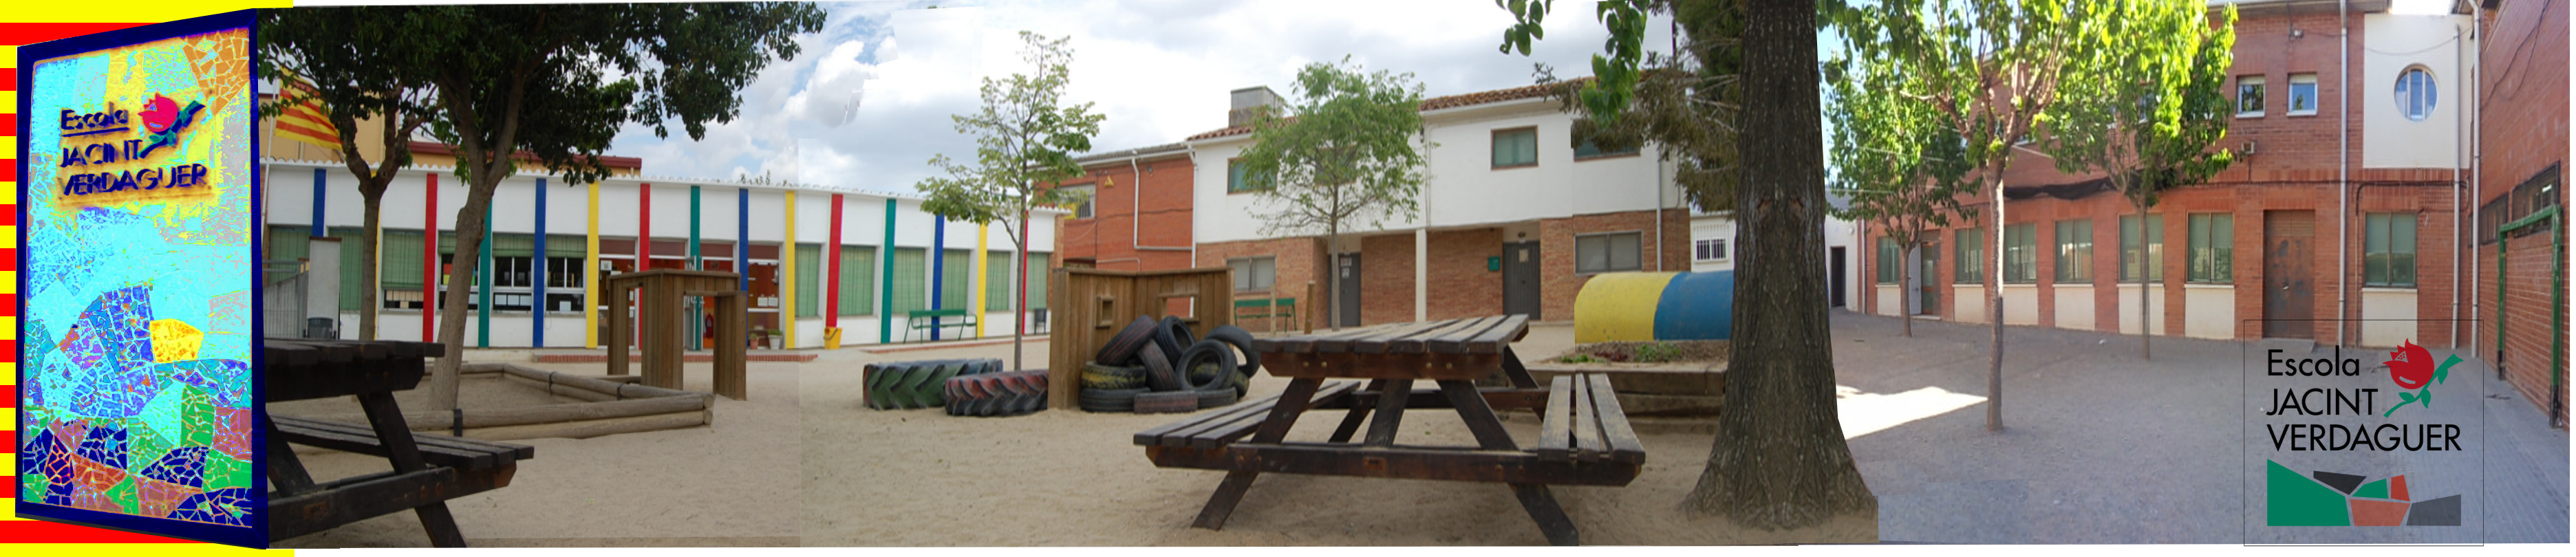 Escola Jacint Verdaguer La Granada - Premio Espiral